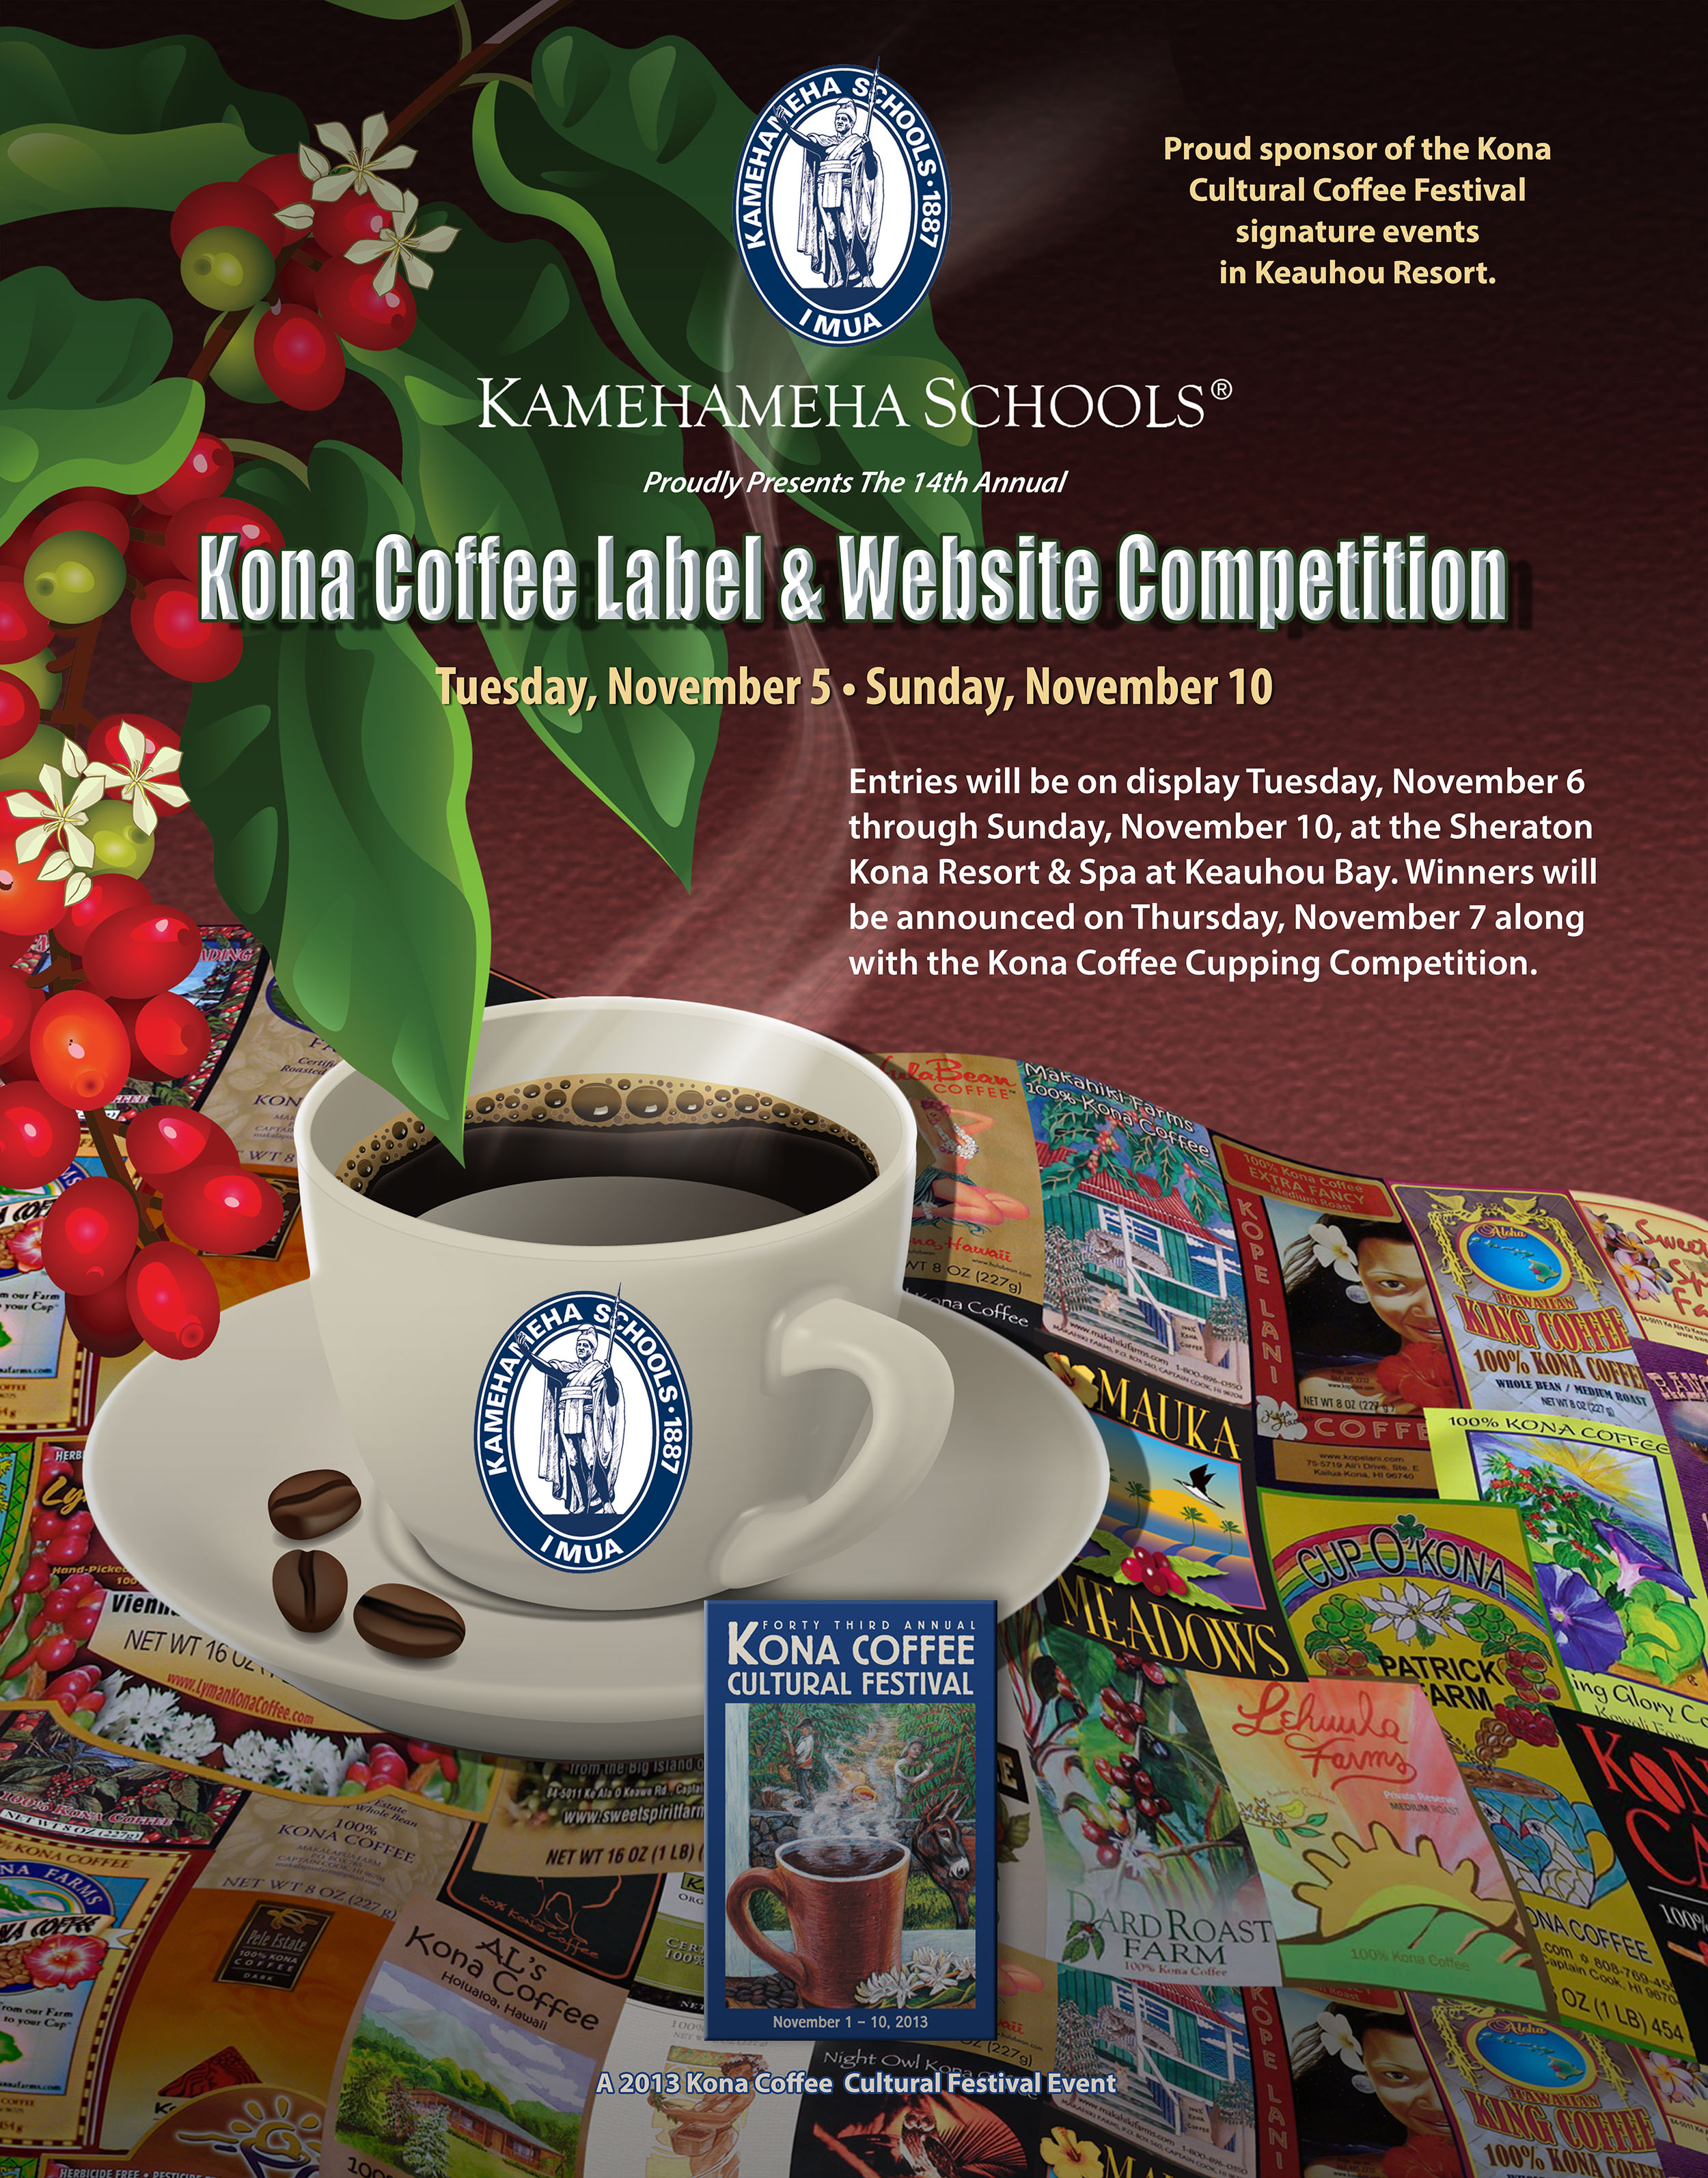 KS KCCF 2013 Poster